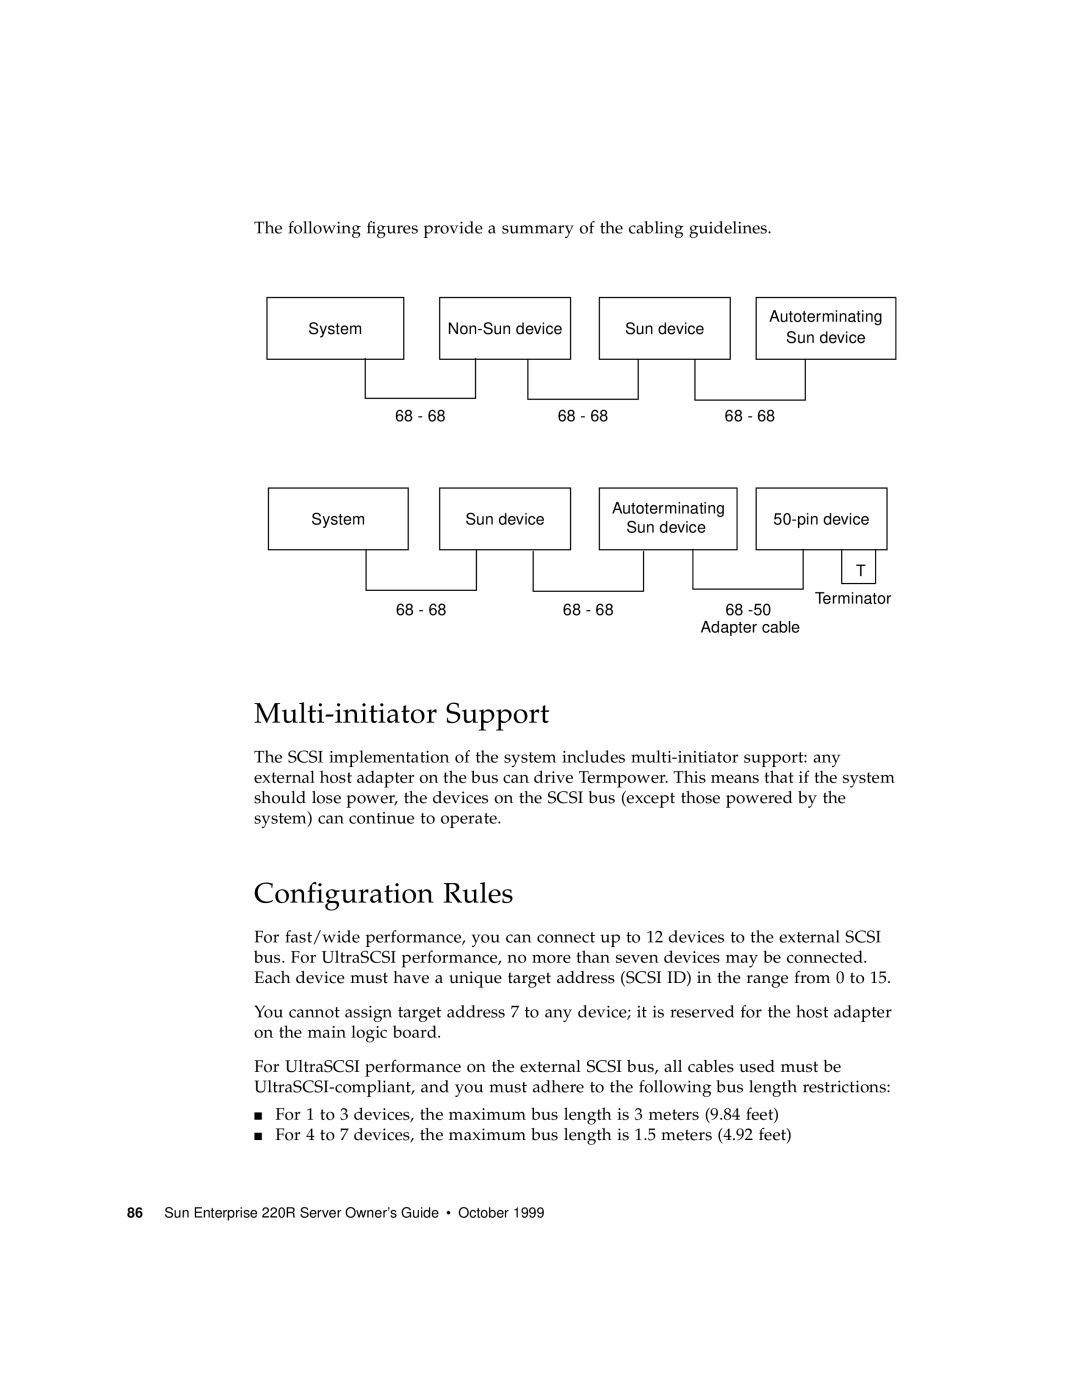 Sun Microsystems 220R manual Multi-initiator Support, Configuration Rules 